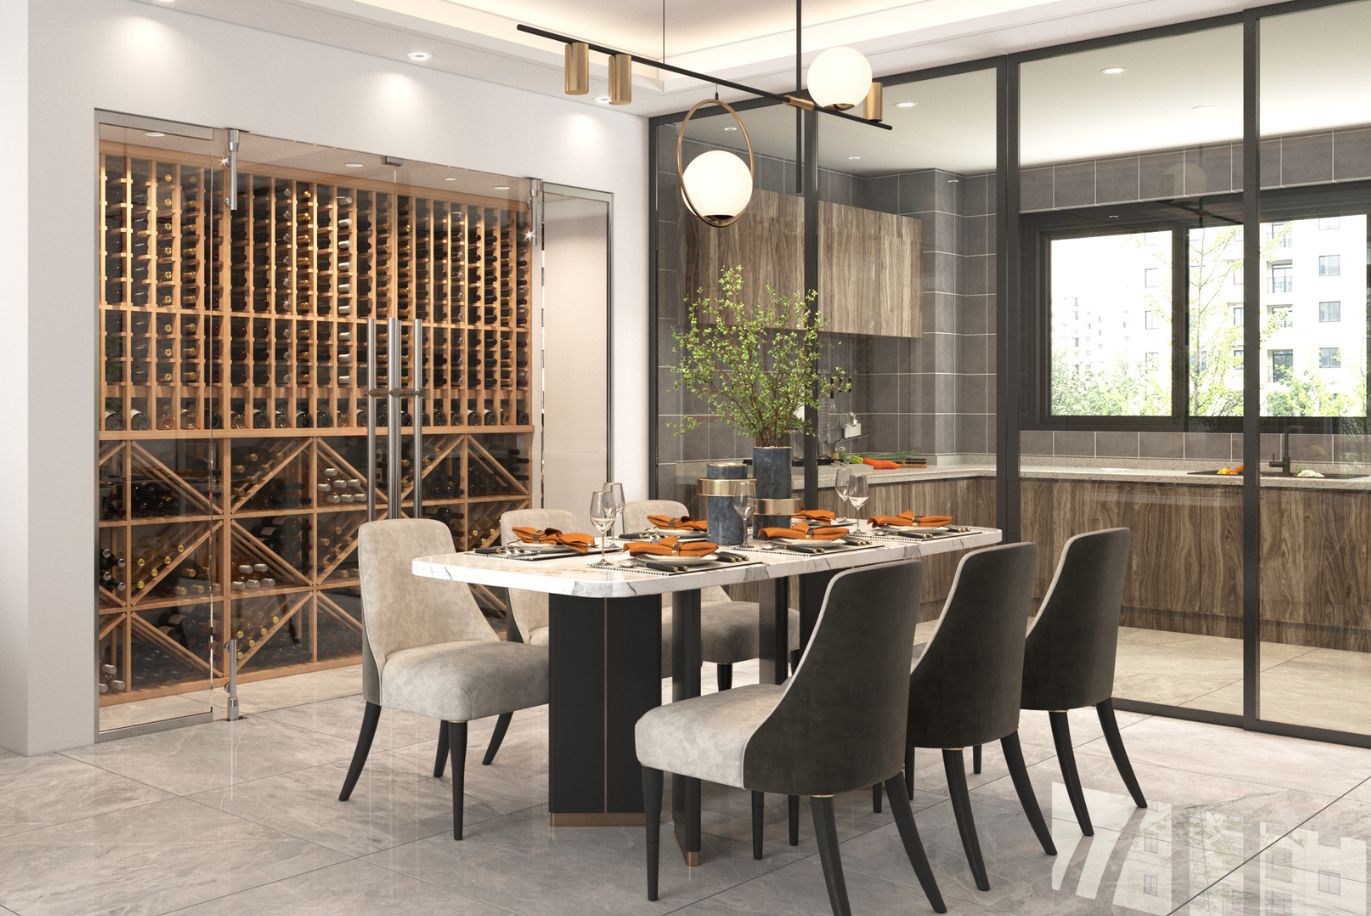 traditional wine cellar racks in glass enclosed cellar - modern home design